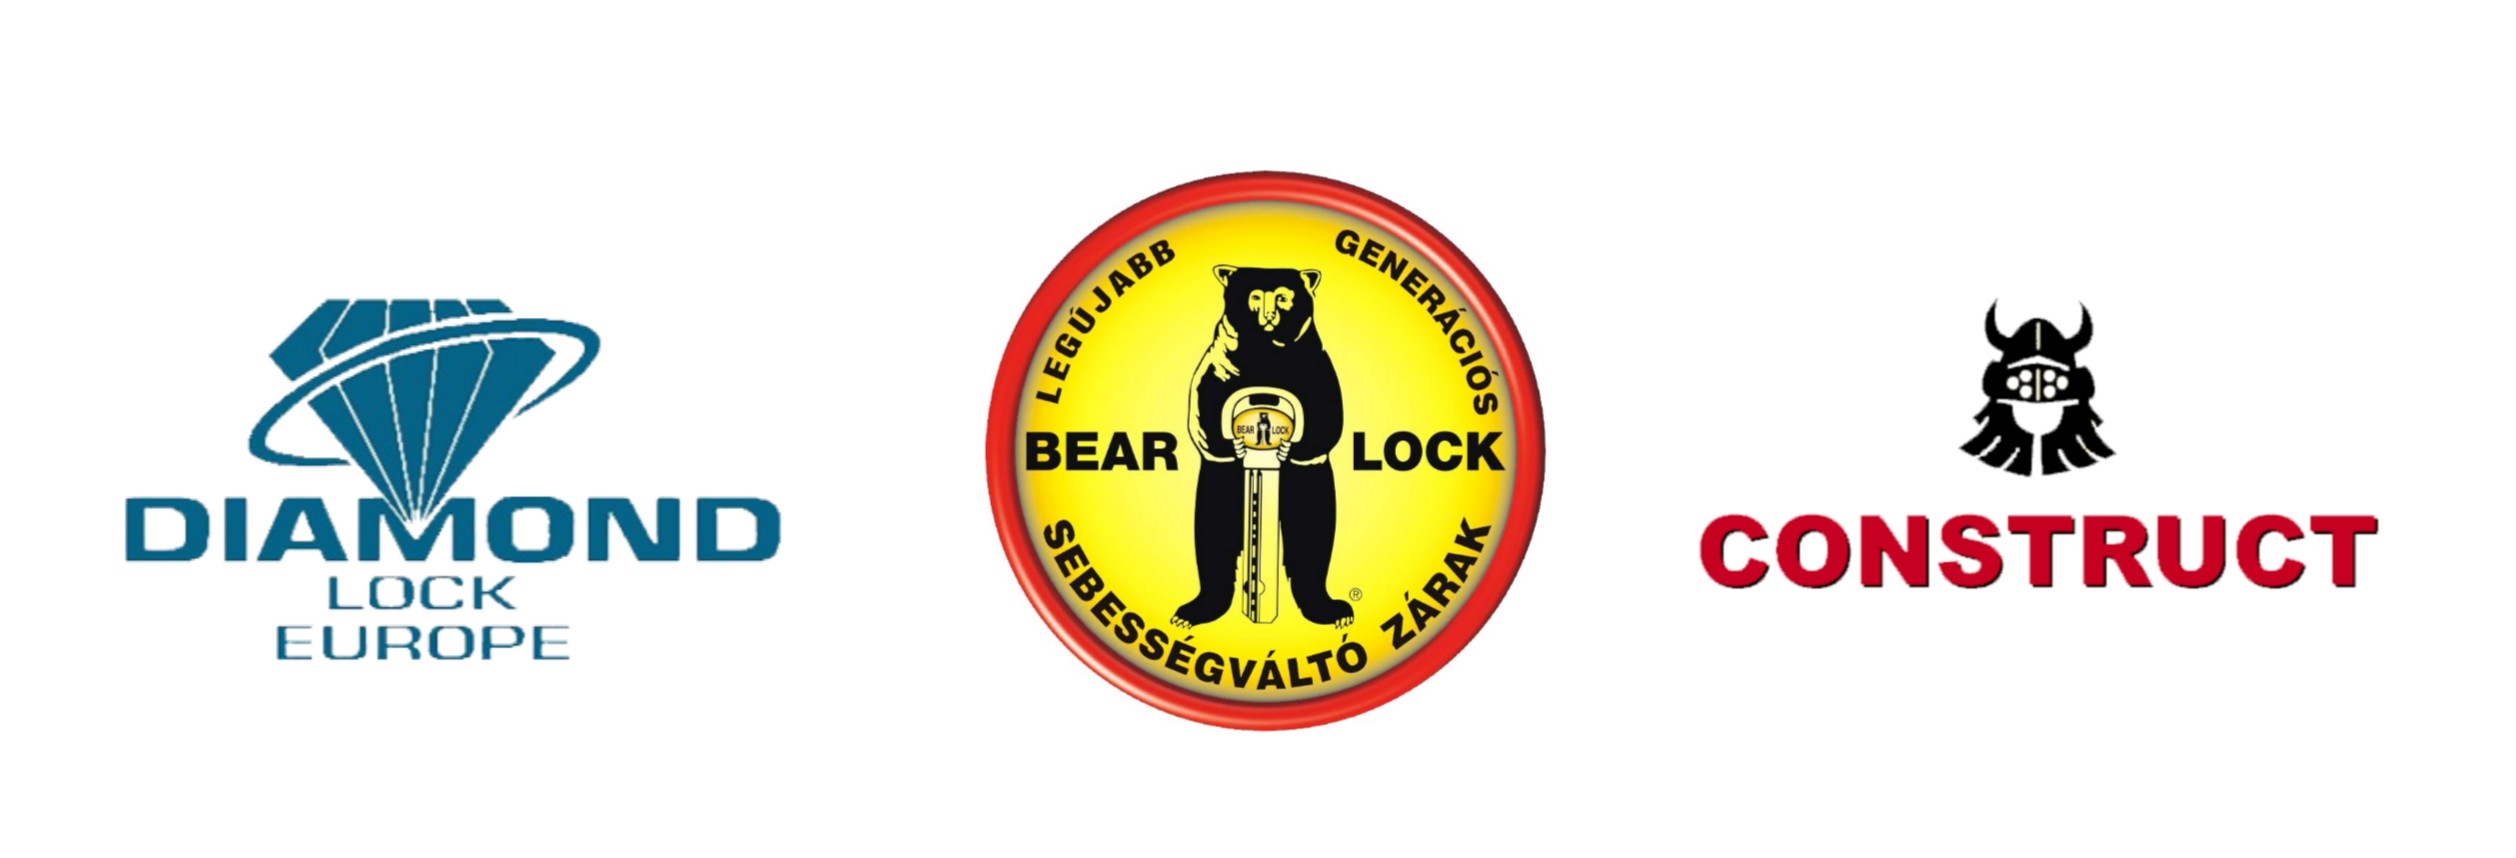 Diamondlock Bearlock Construct logo